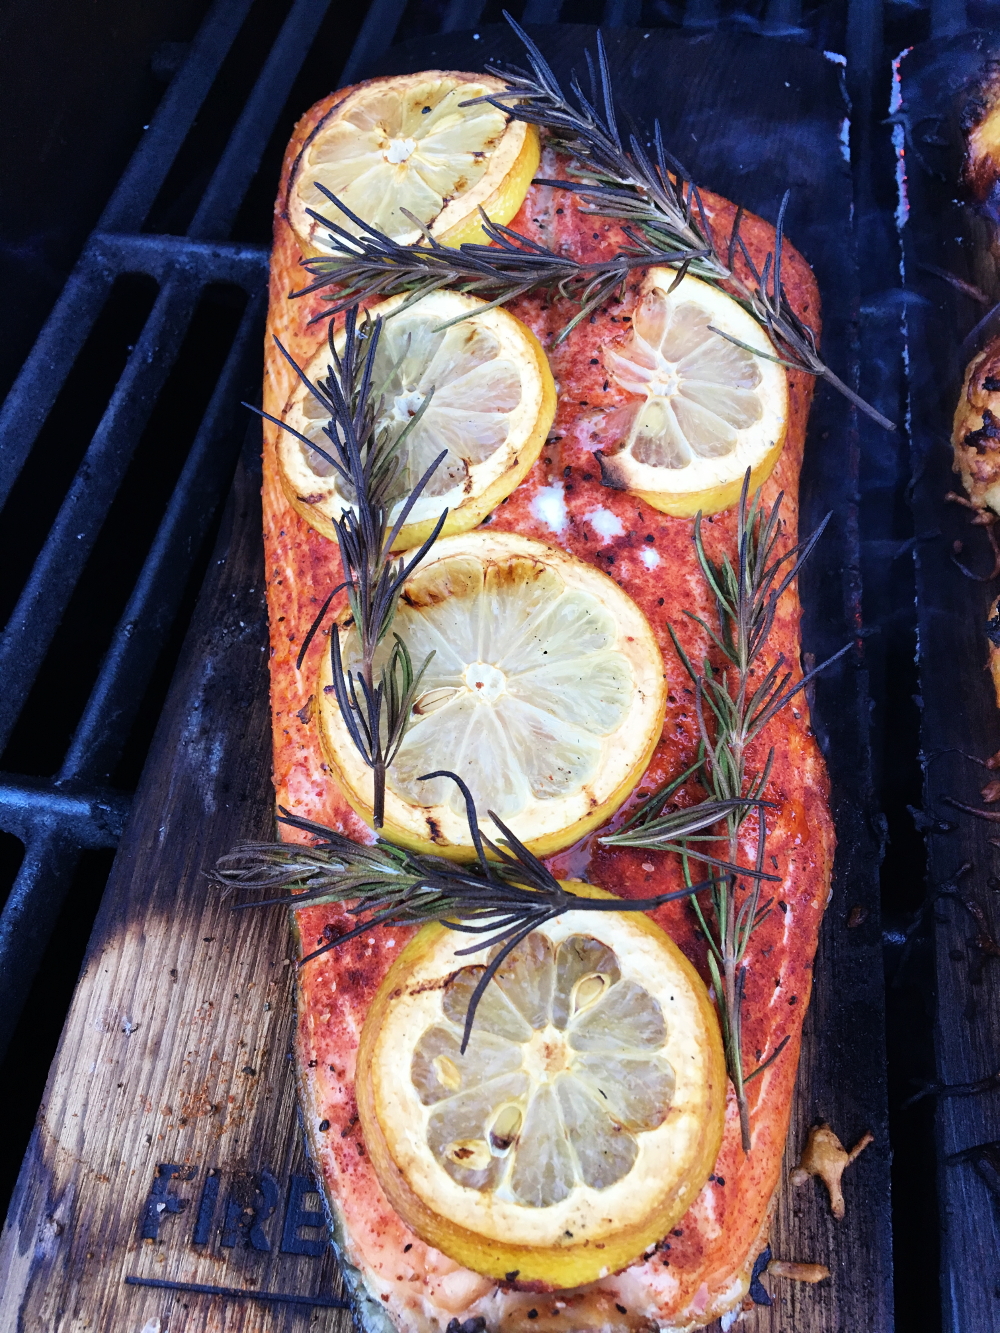 Planked Salmon